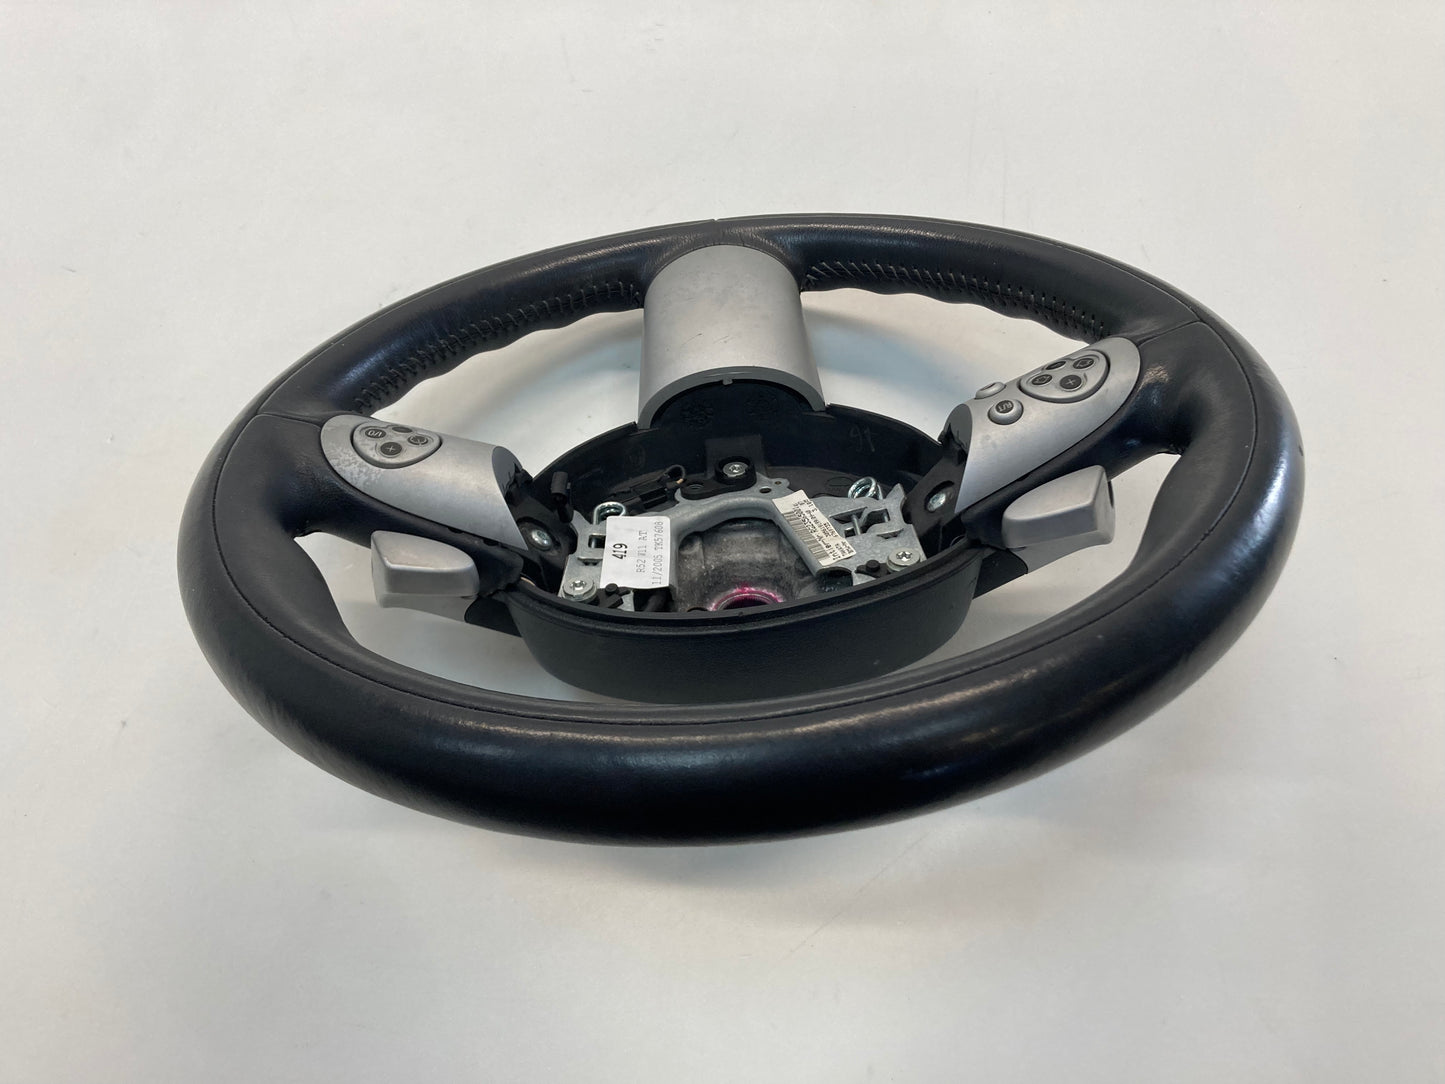 Mini Cooper Sports Wheel Multifunction Steptronic 32306769735 04-08 R50 R52 R53 421